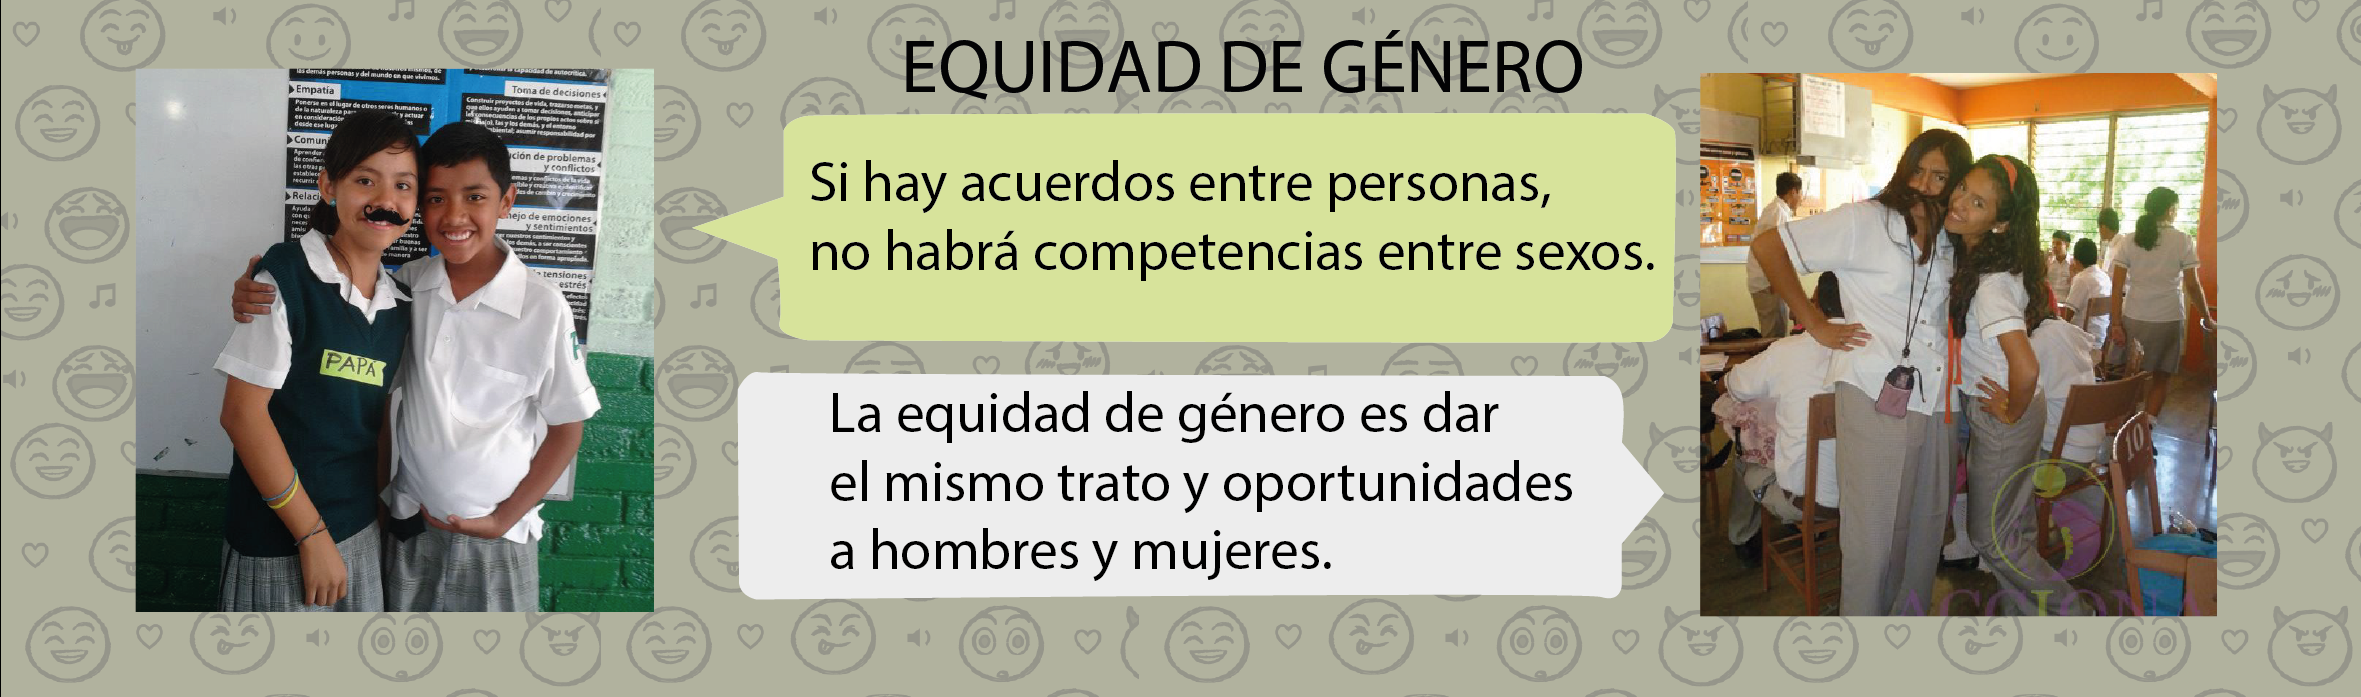 Equidad1.png